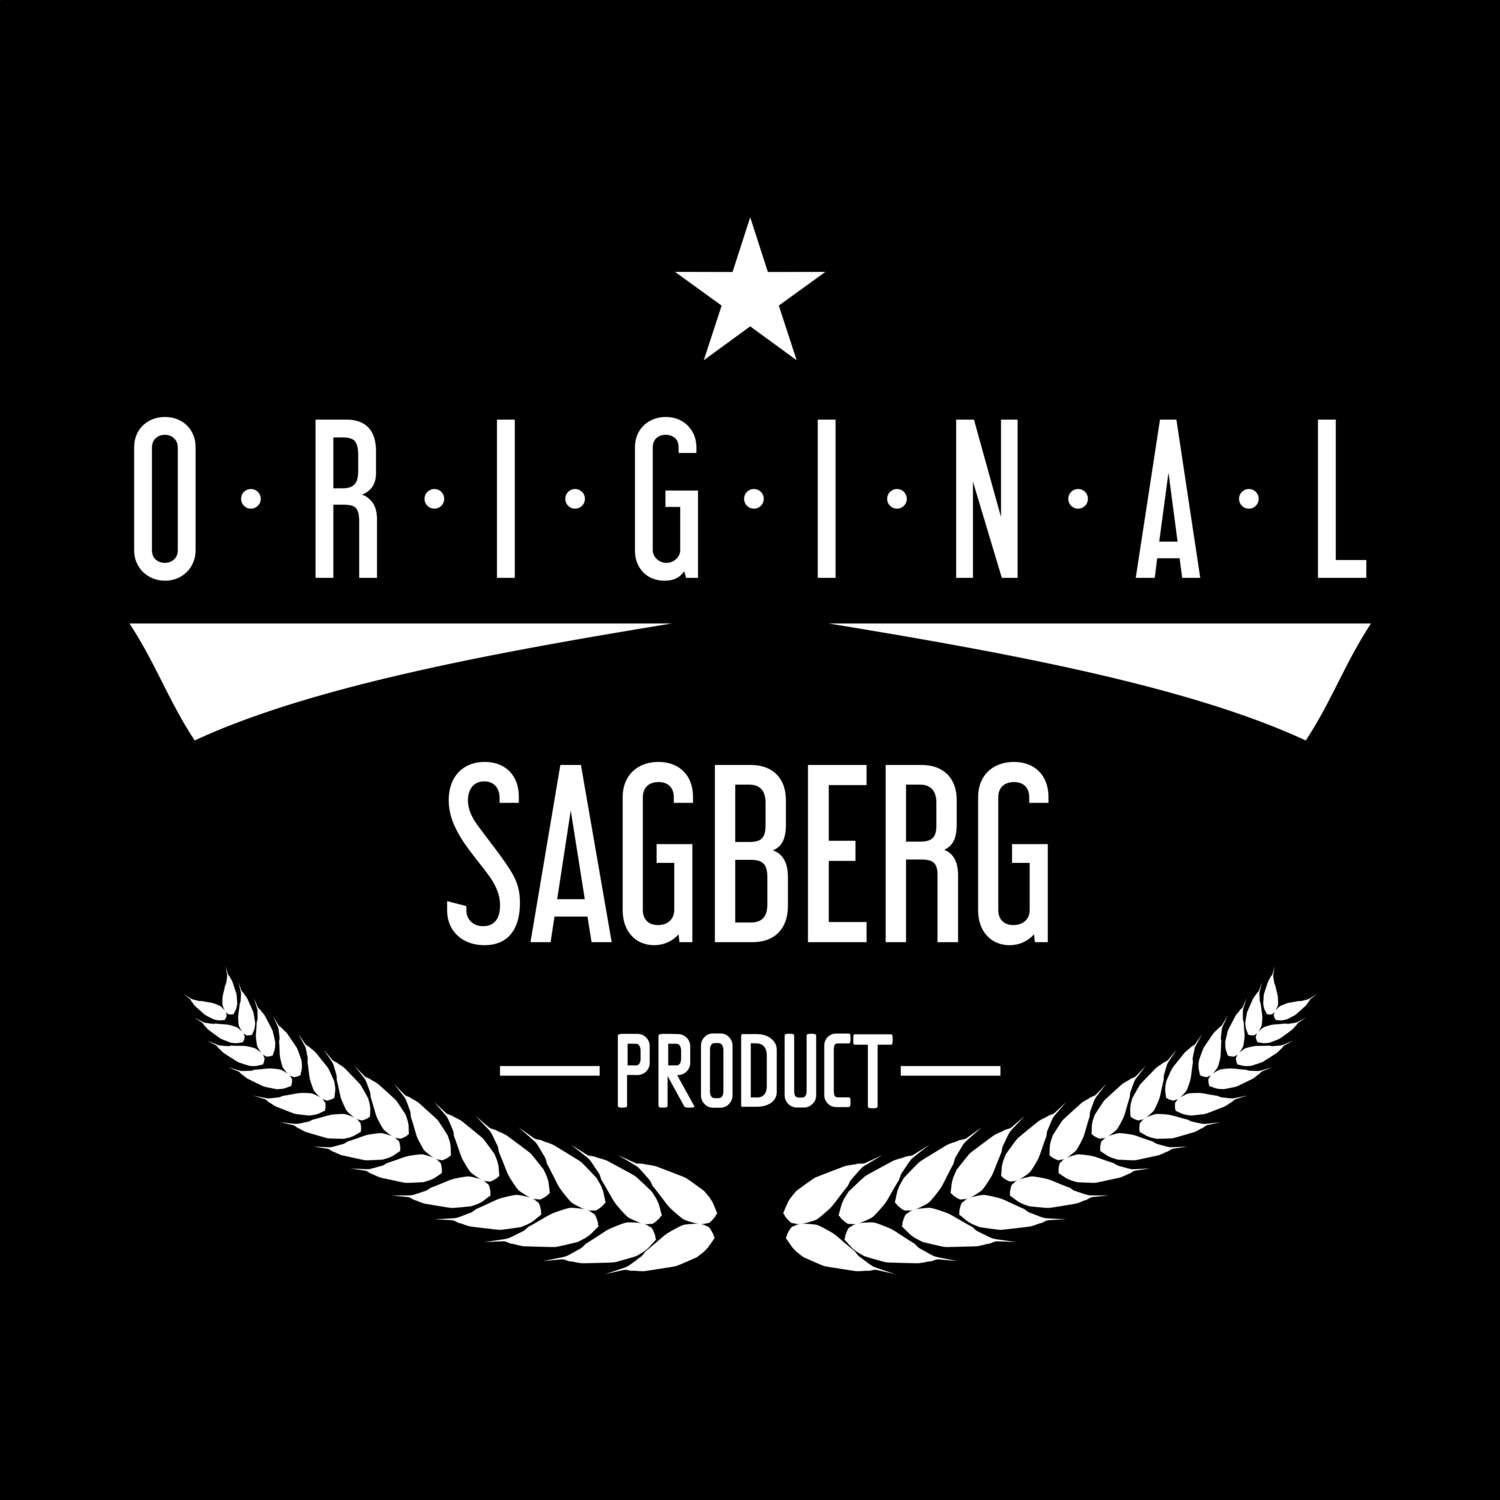 Sagberg T-Shirt »Original Product«